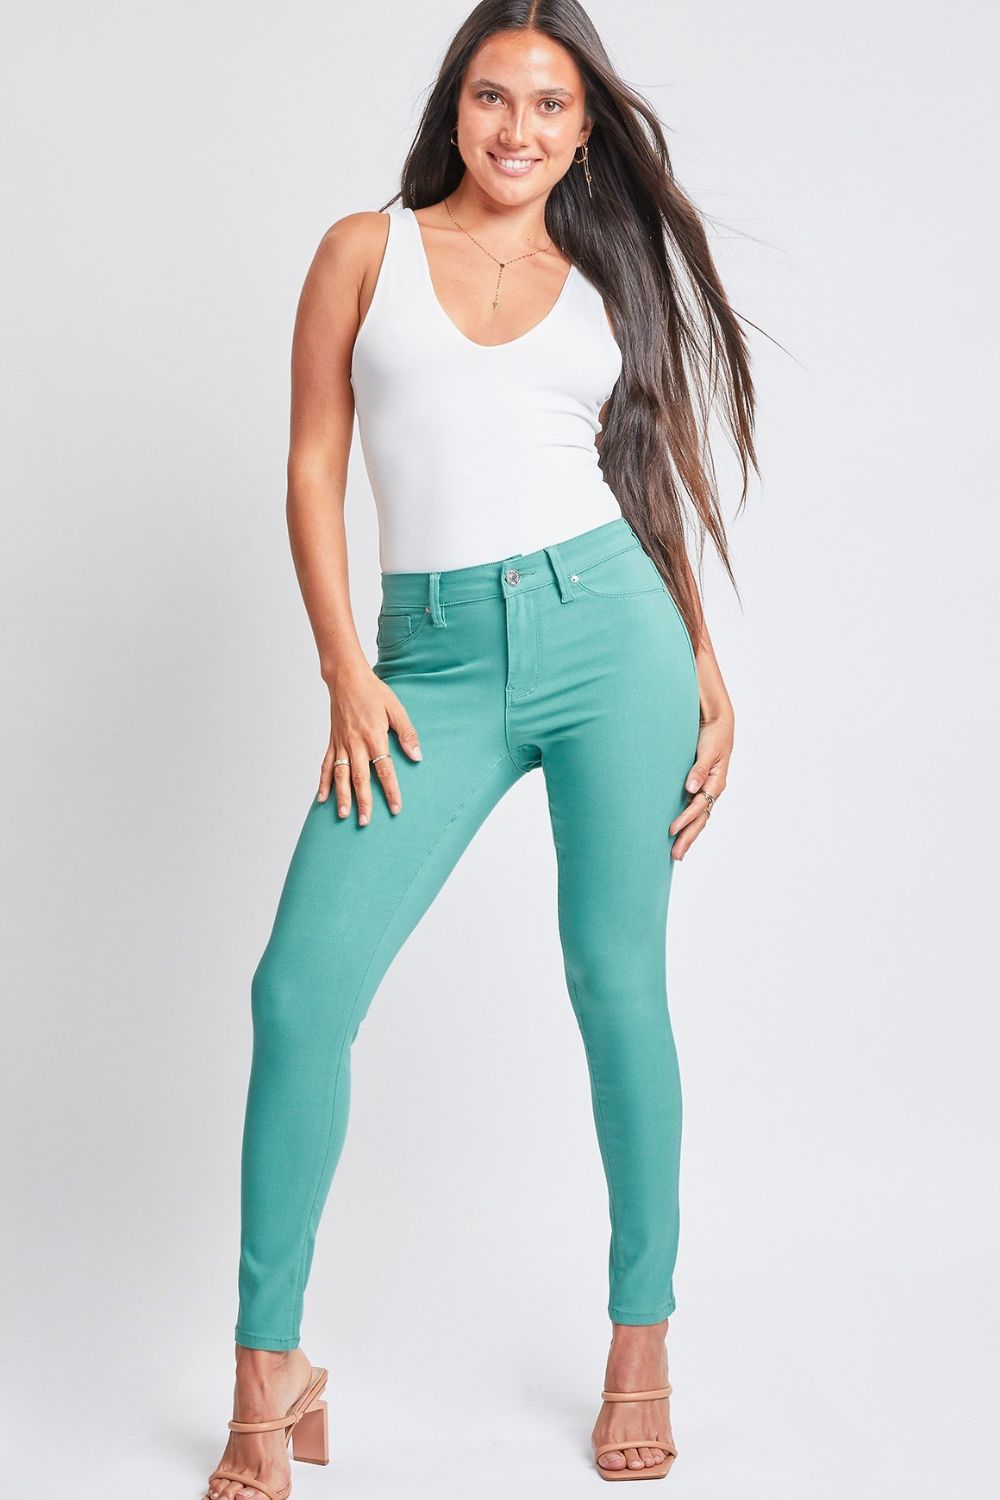 Sea Green Small-3XL Hyper stretch Mid-Rise Skinny Pants - Tigbuls Variety Fashion